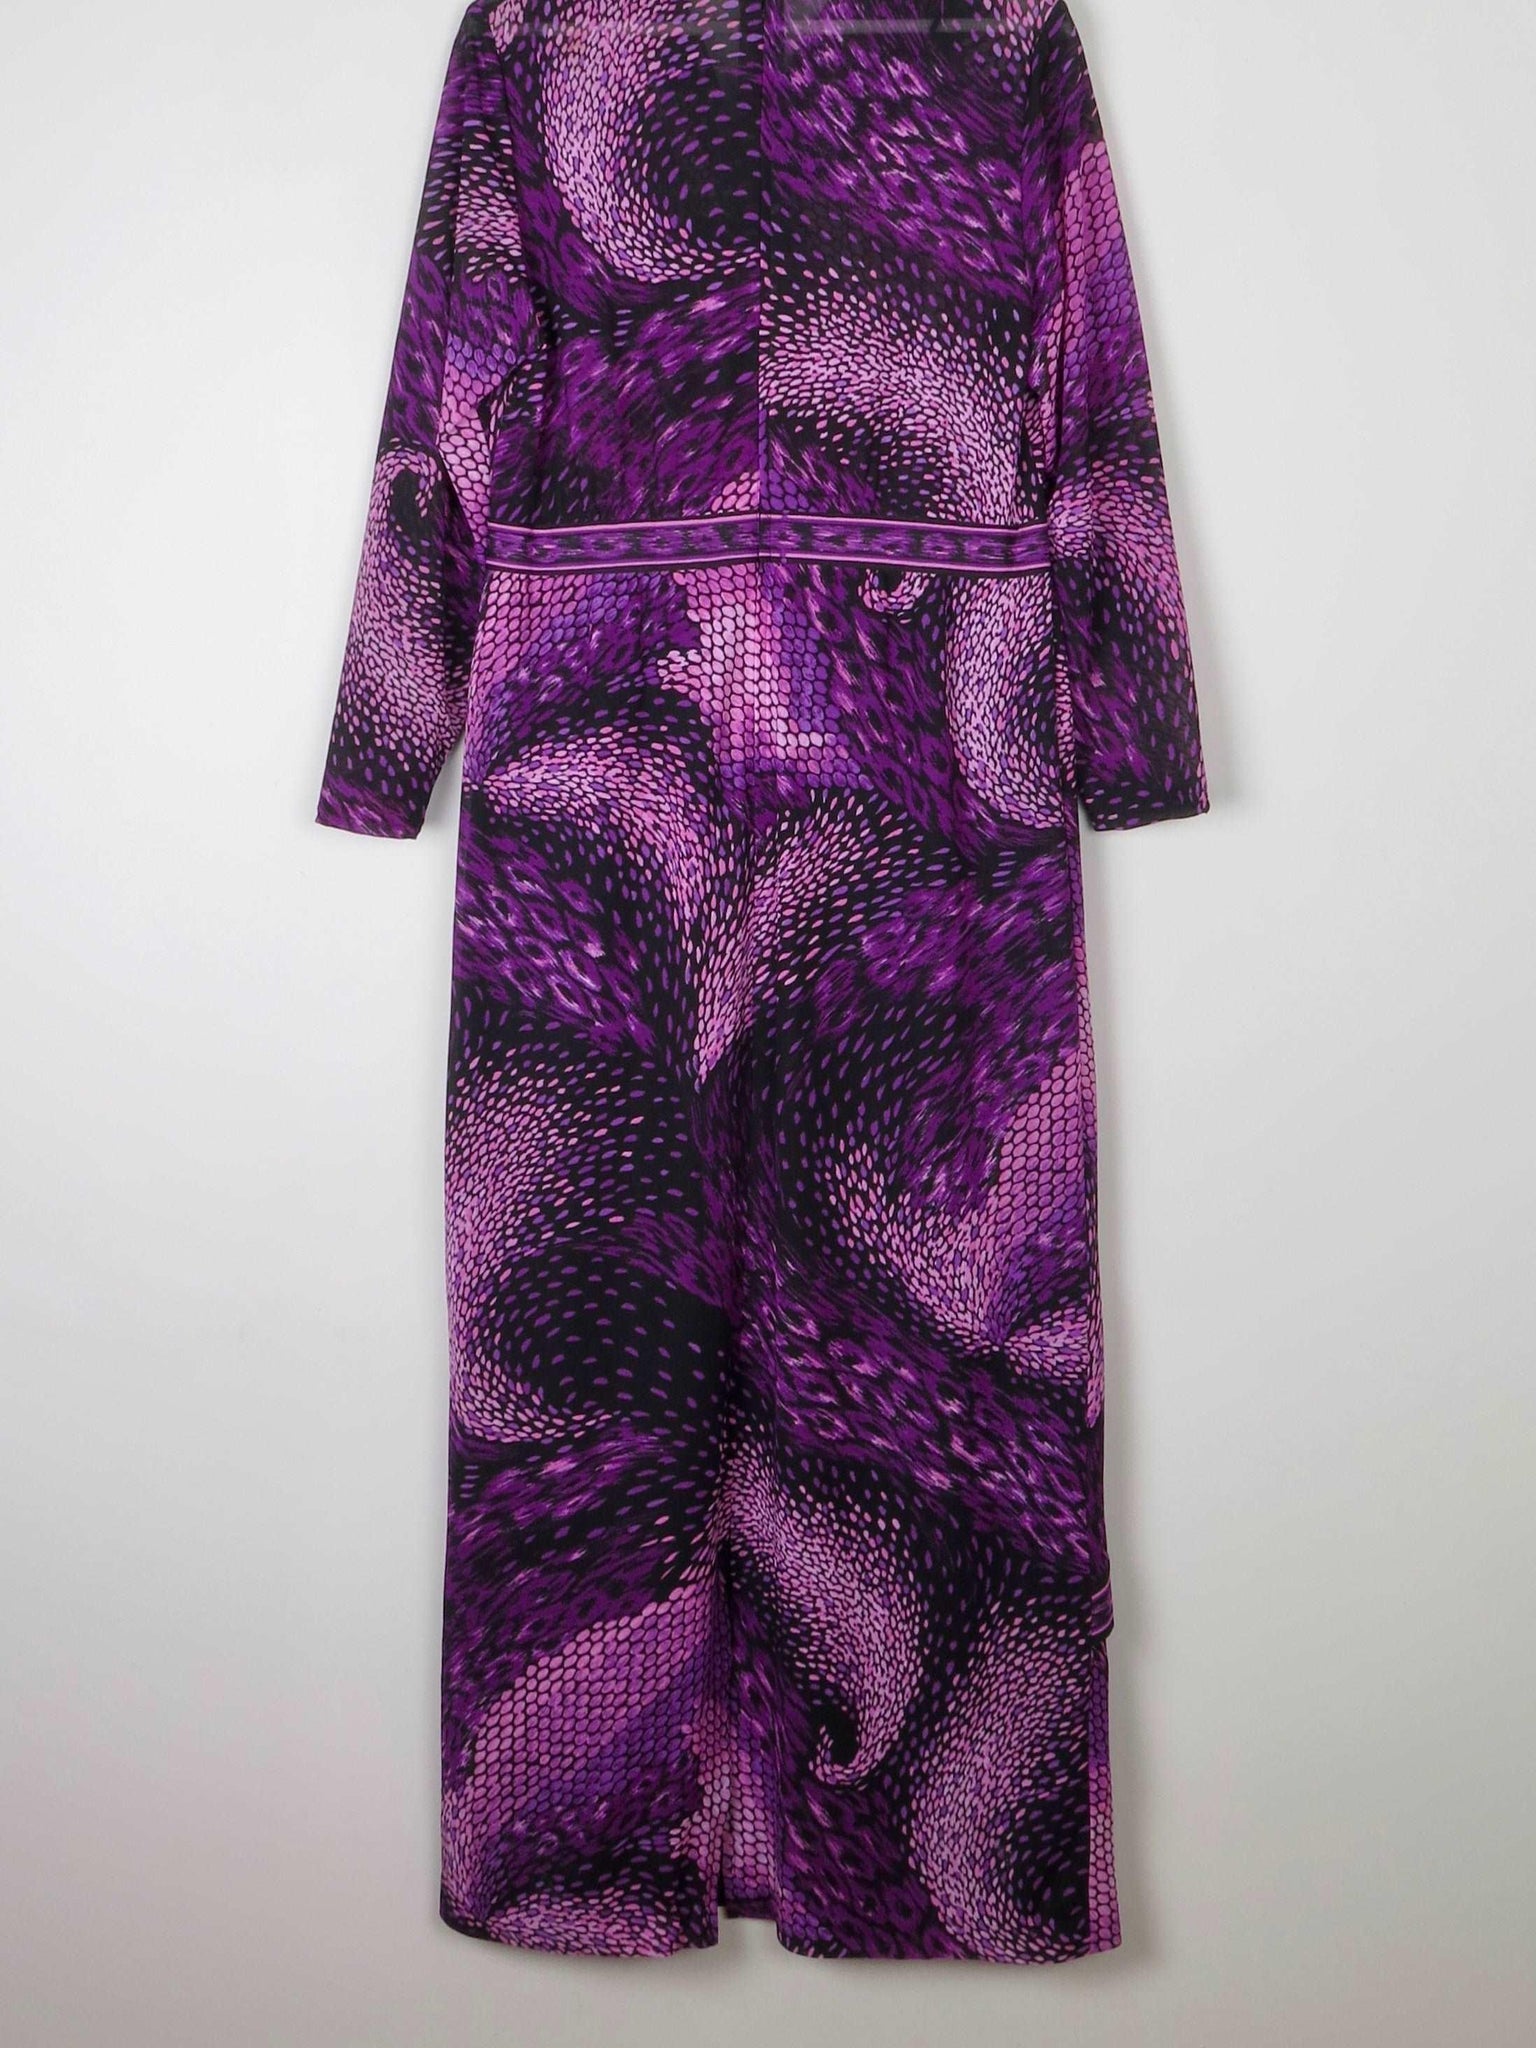 1970s Vintage Purple Maxi Dress 12/14 - The Harlequin